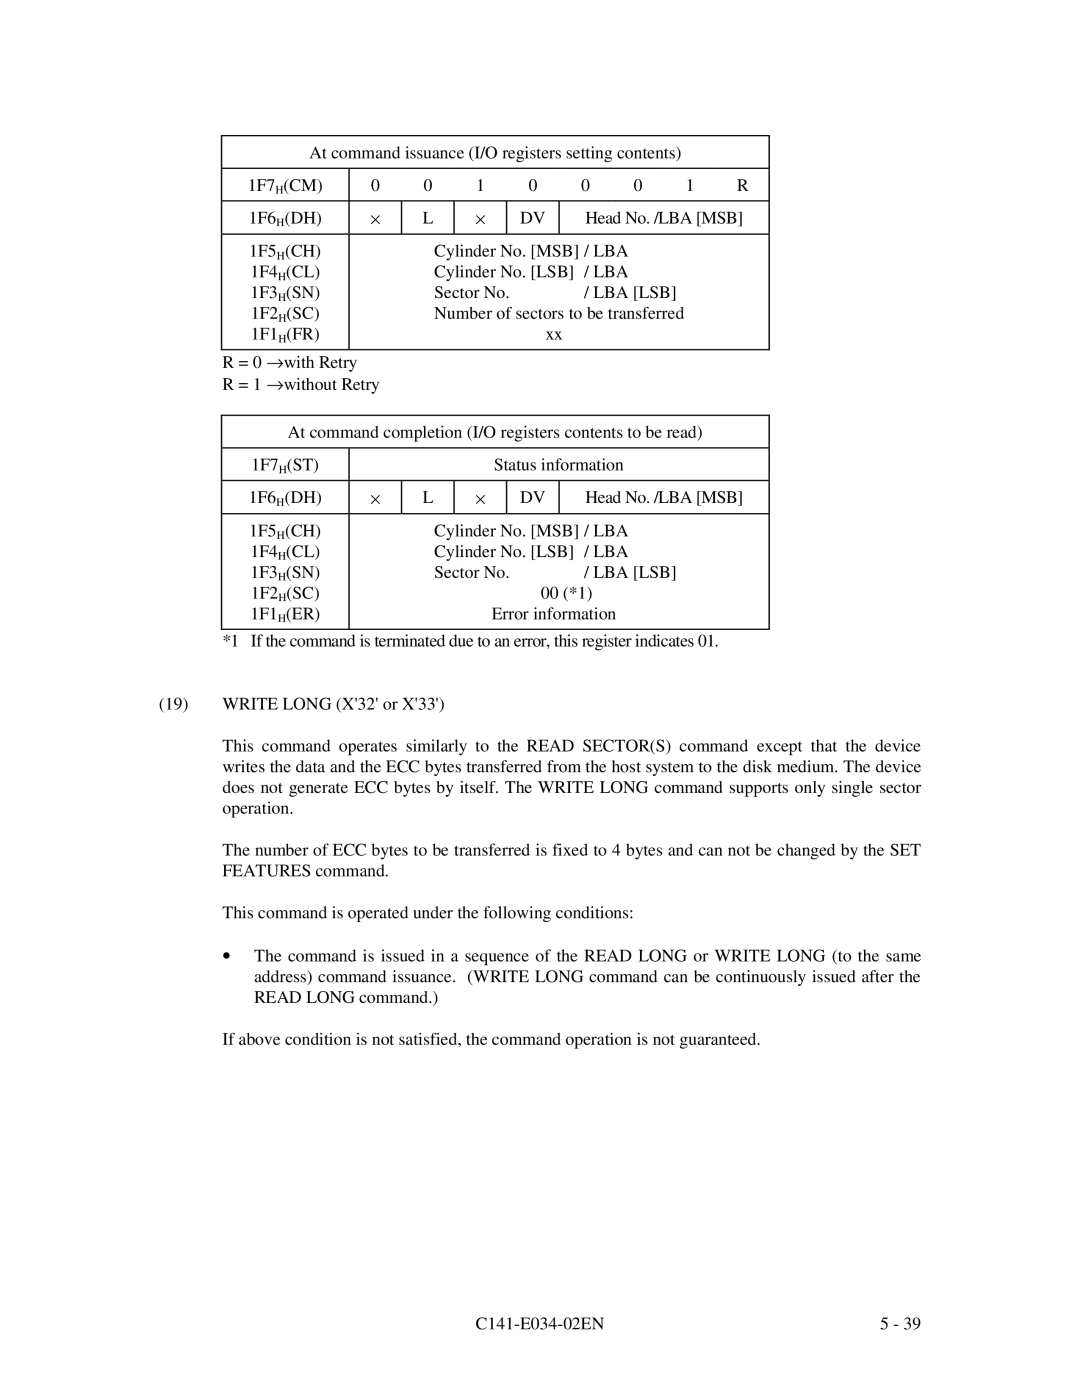 Fujitsu MPA3043AT At command issuance I/O registers setting contents, 1F7 HCM, 1F6 HDH, Head No. /LBA MSB, 1F5 HCH, 00 *1 